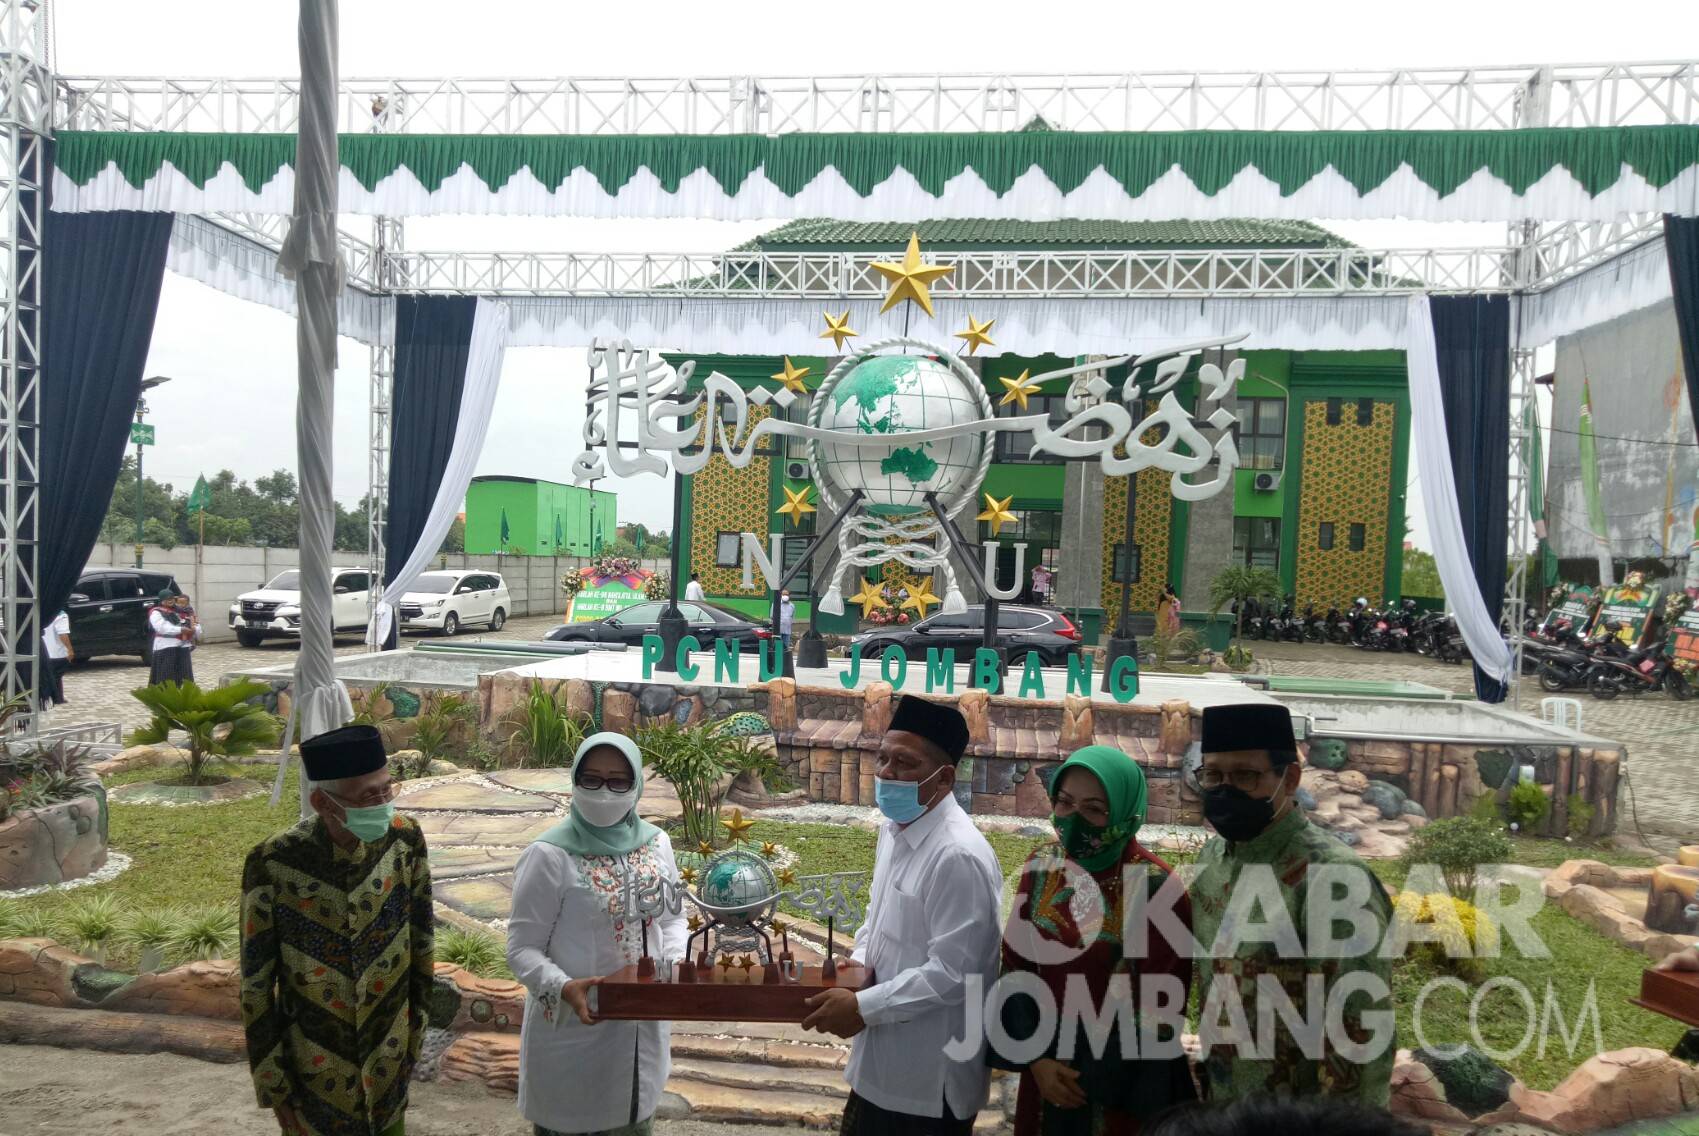 Peresmian monumen lambang NU terbesar di dunia di kantor PCNU Kabupaten Jombang, Minggu (28/2/2021). KabarJombang.com/Diana Kusuma Negara/